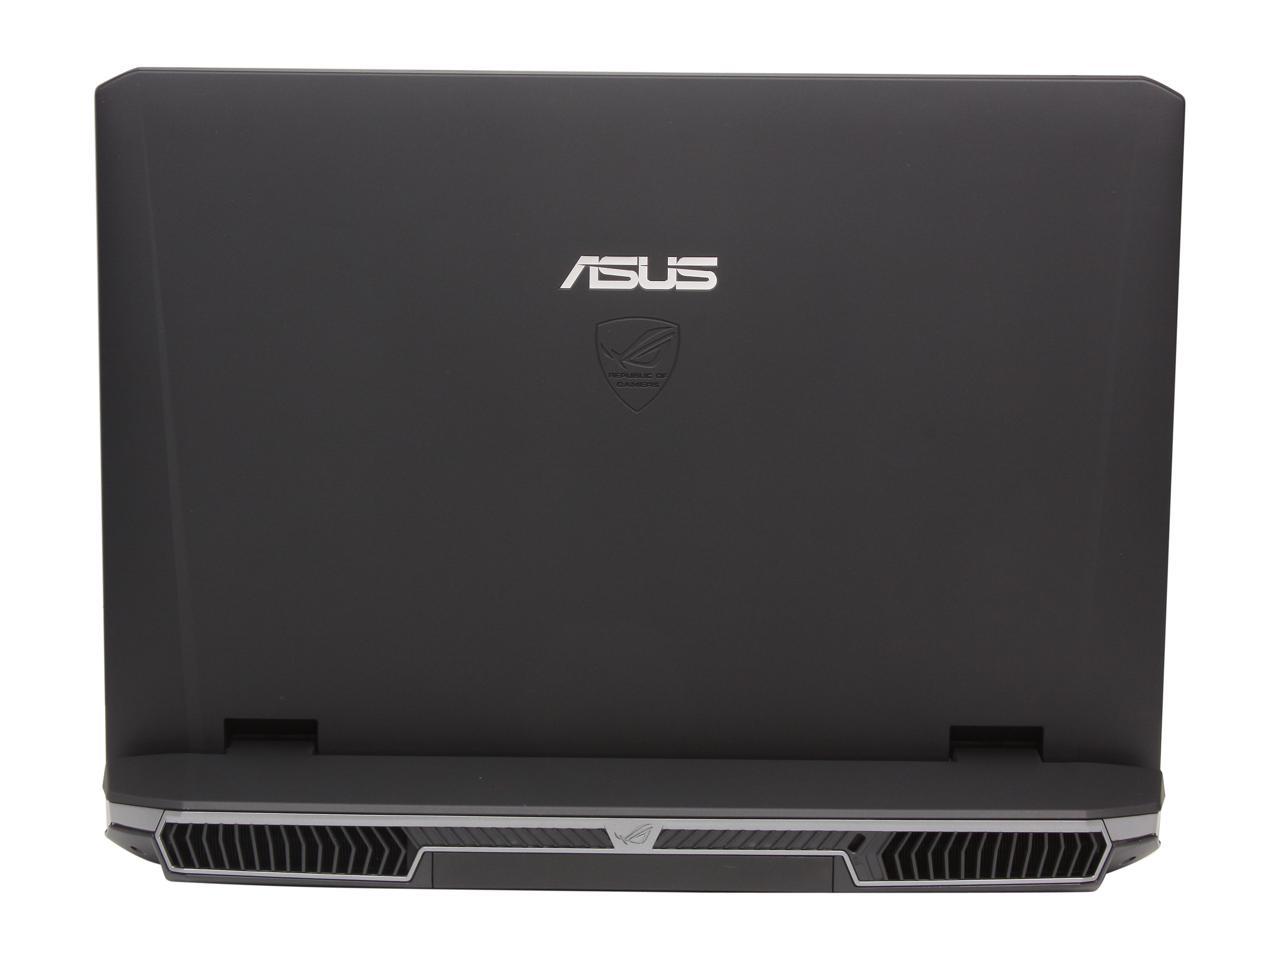 ASUS G75VW-NS71 Gaming Laptop Intel Core i7-3610QM 2.3GHz 17.3